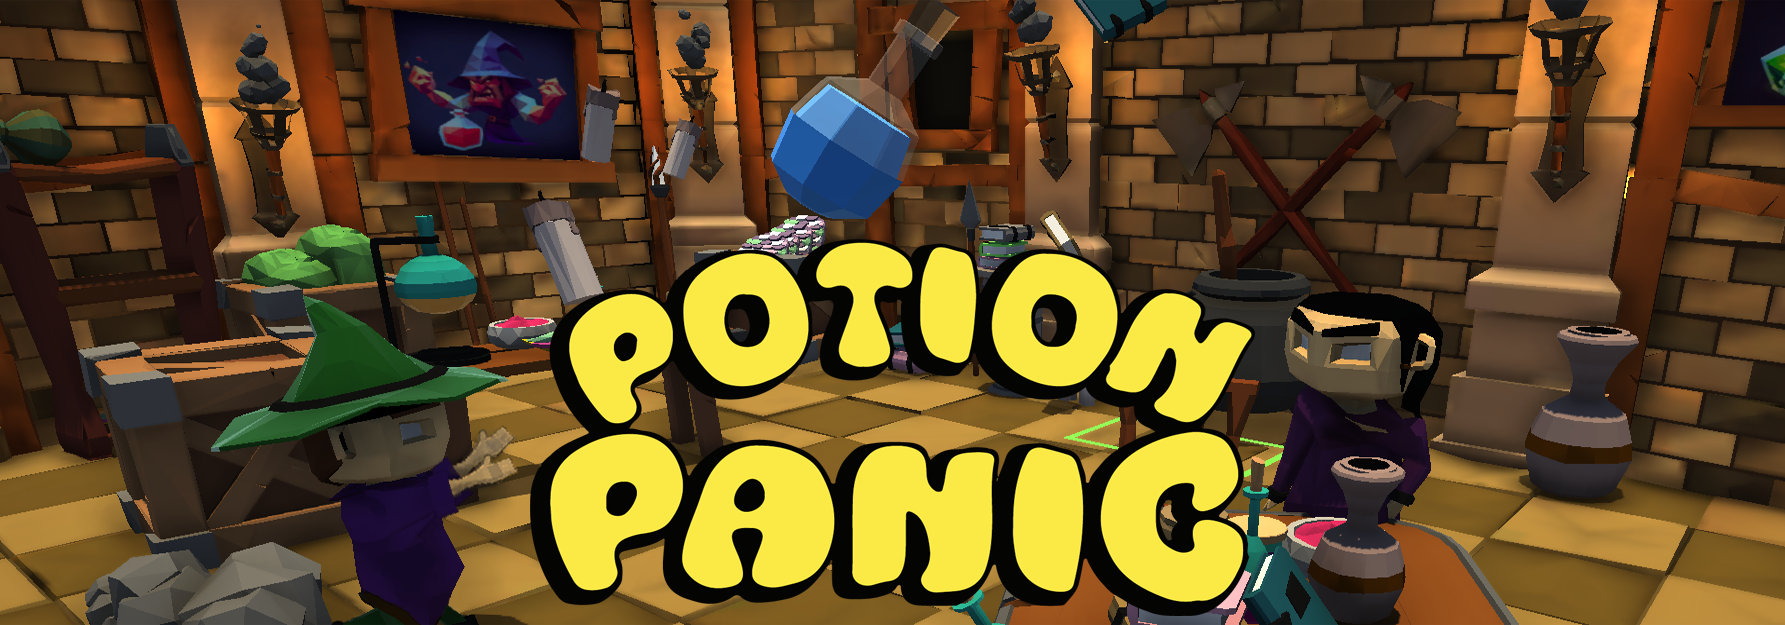 Potion Panic